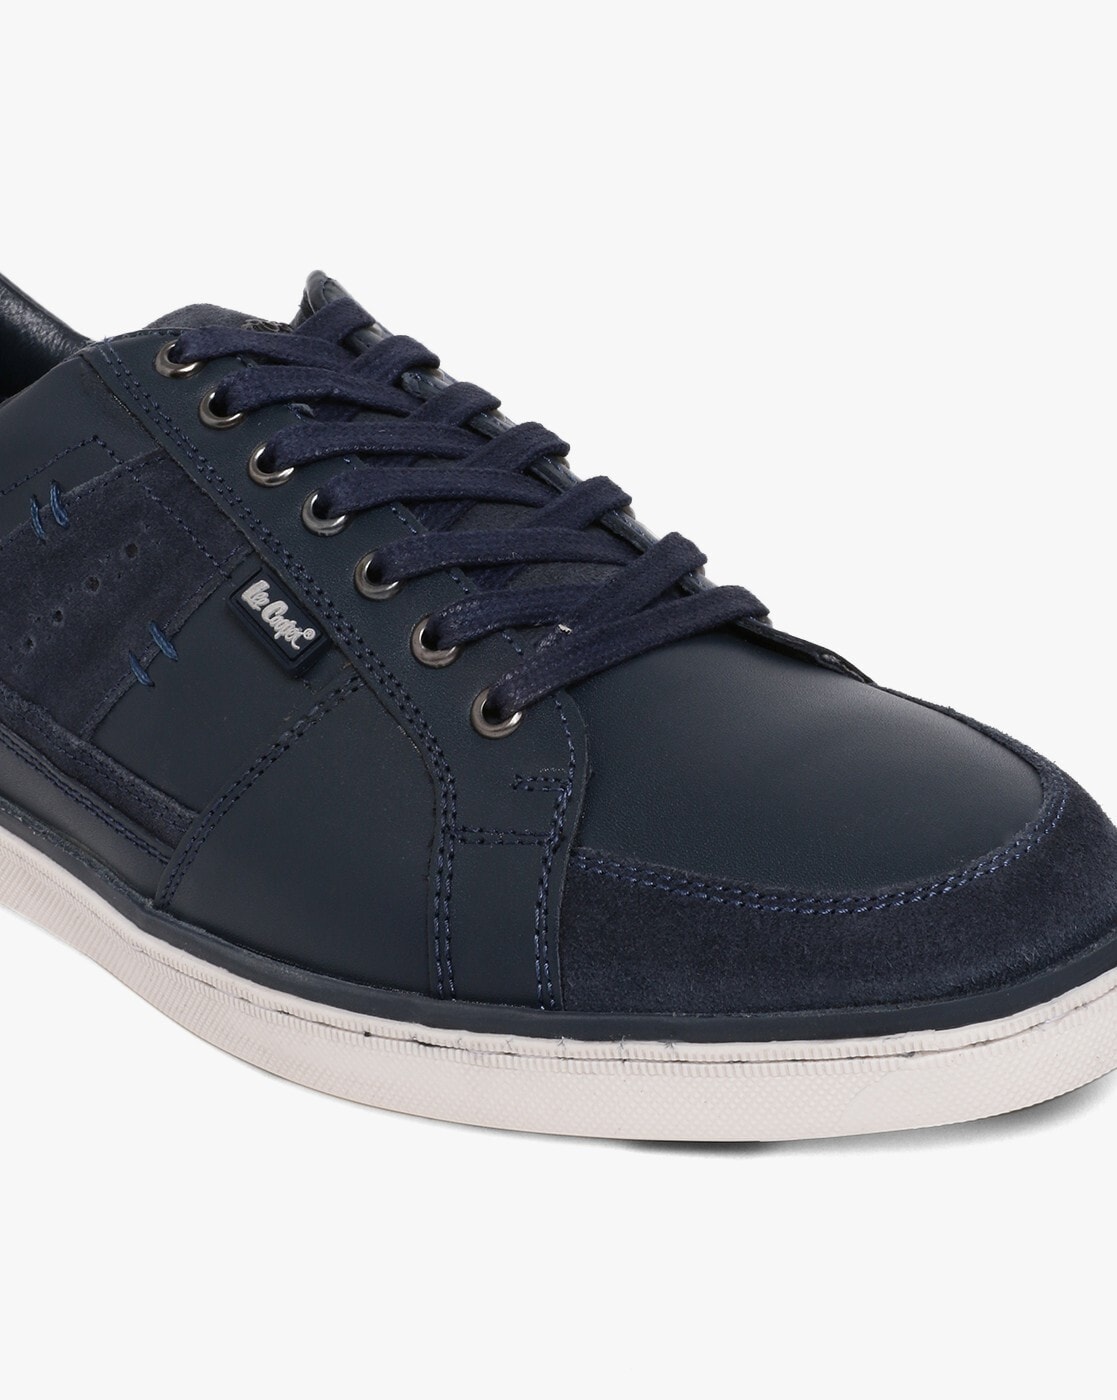 Buy Navy Blue Sneakers for Men by Lee Cooper Online